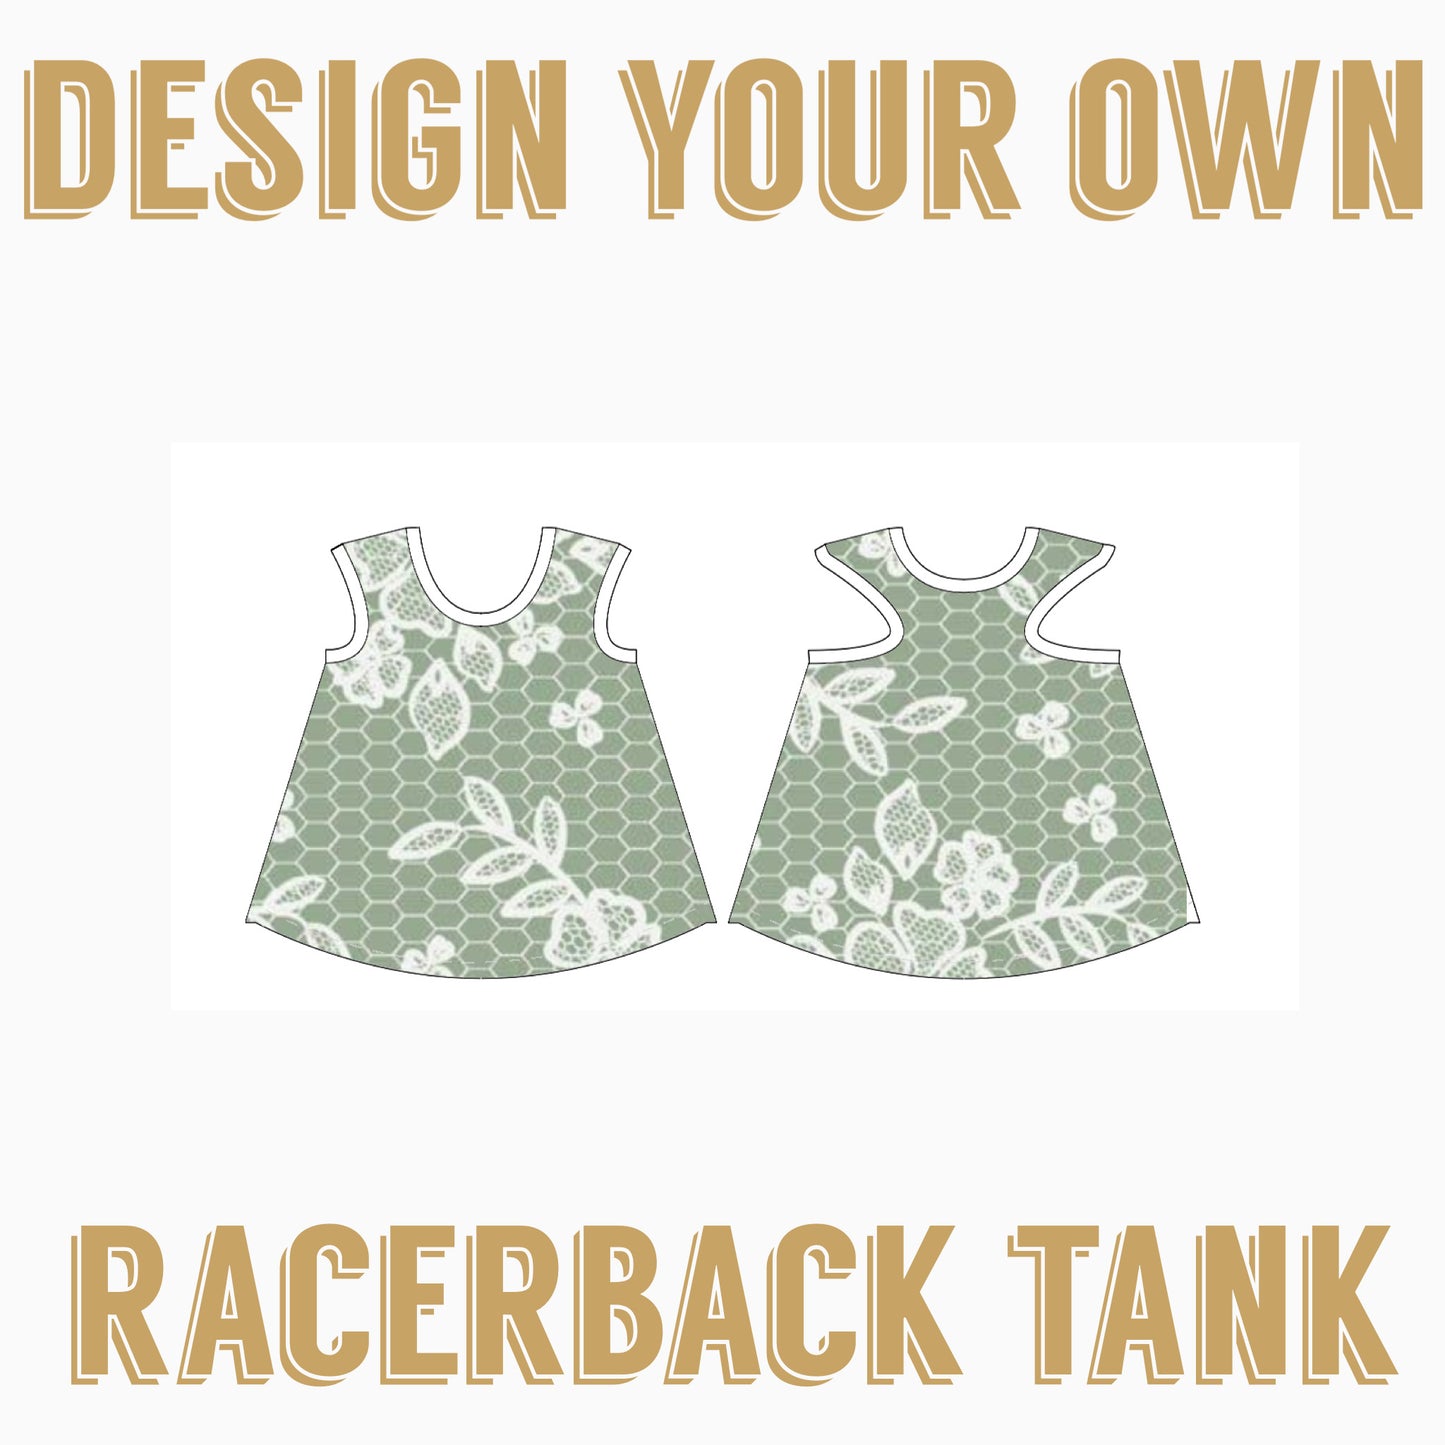 Design Your Own| Racerback tank